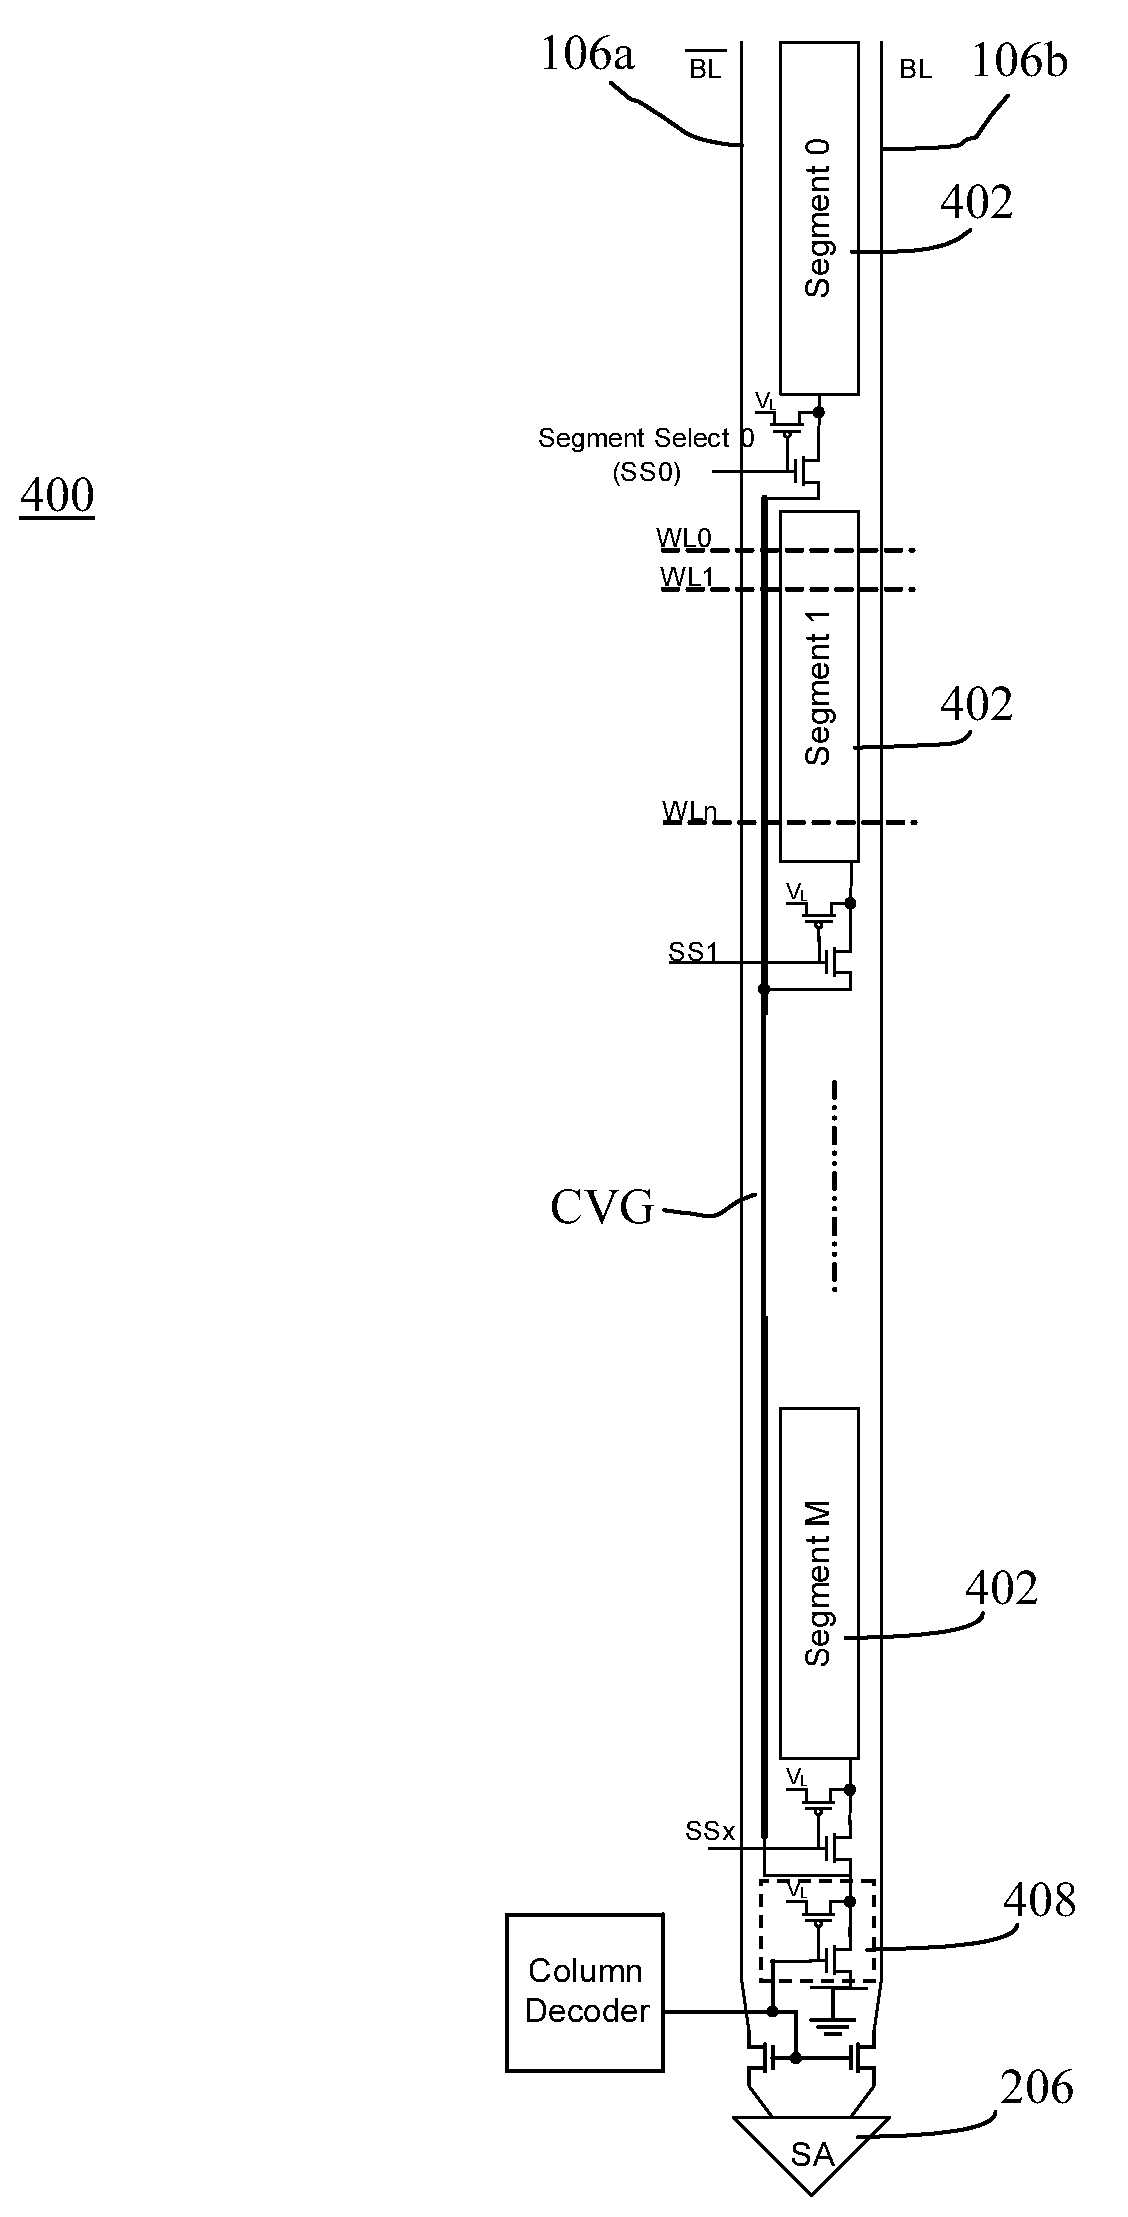 Segmented column virtual ground scheme in a static random access memory (SRAM) circuit